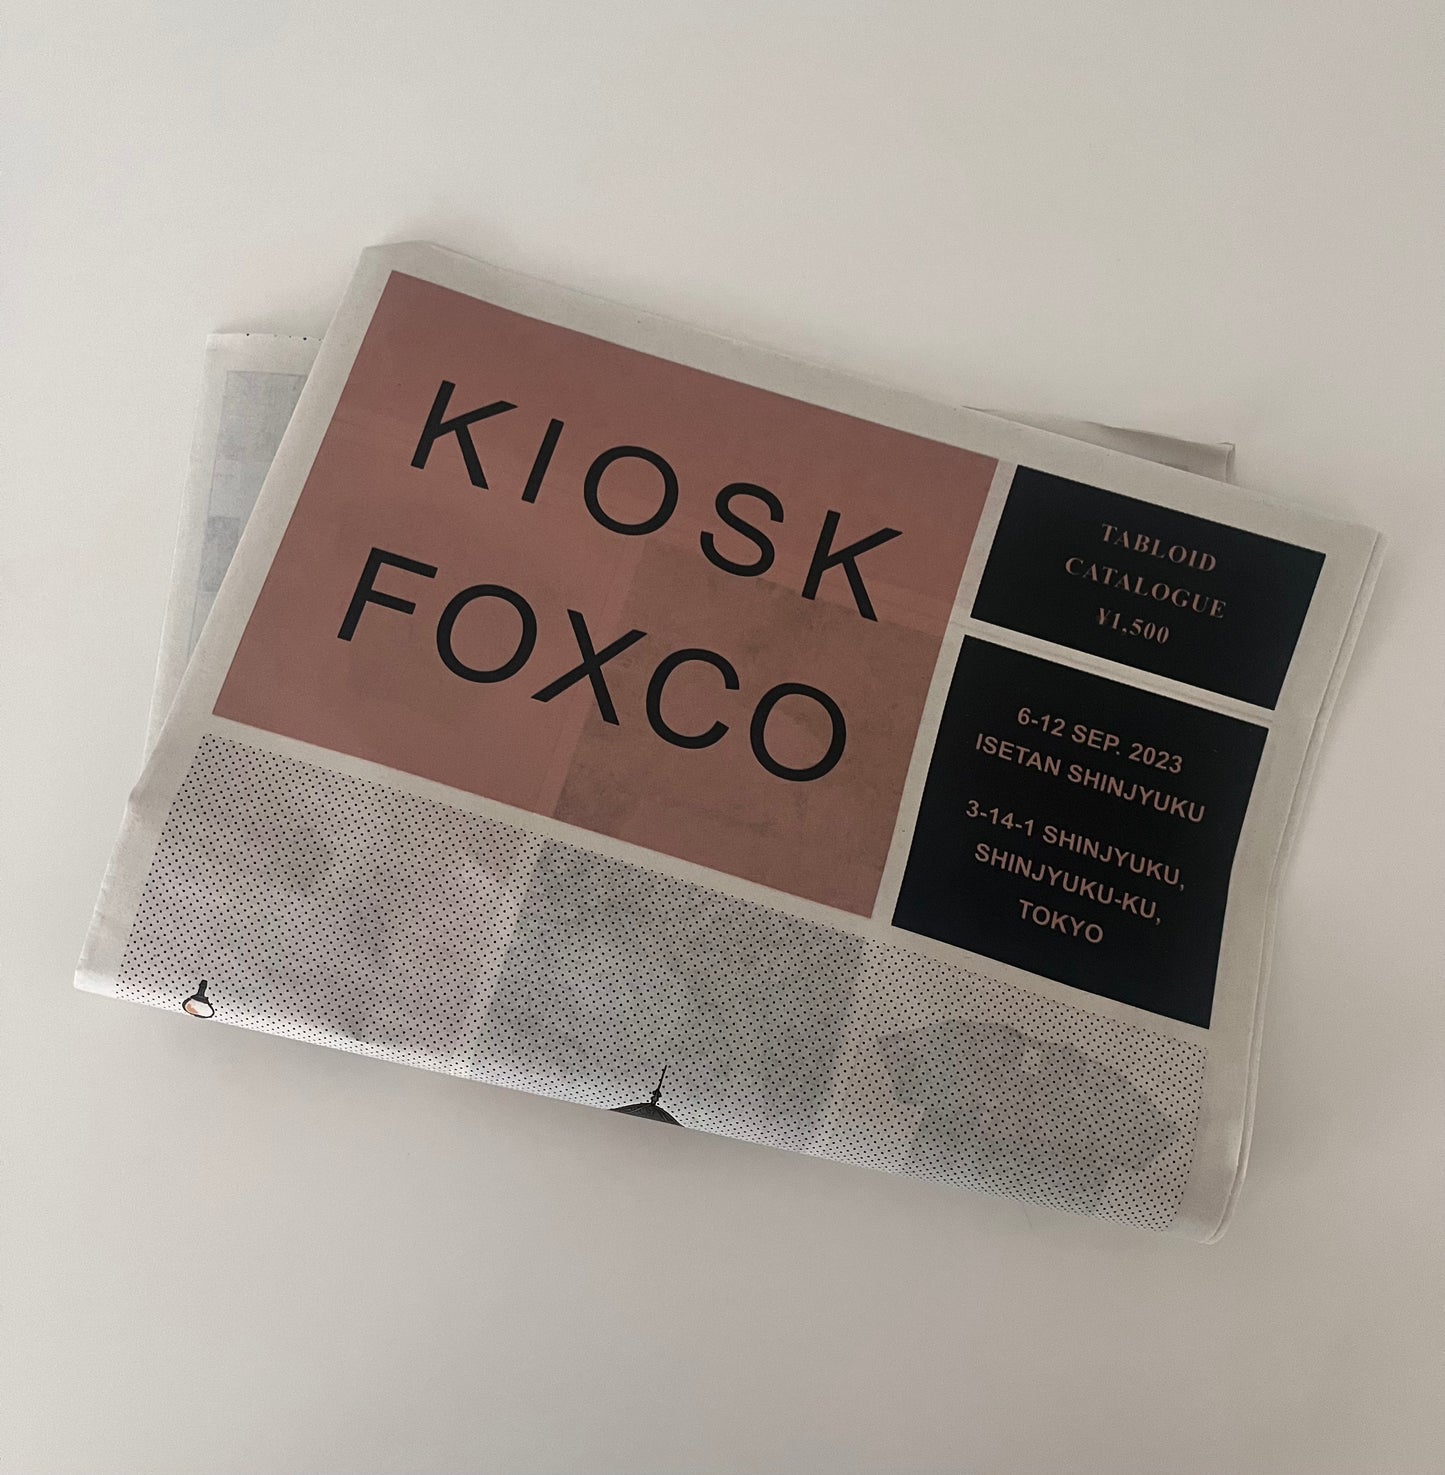 KIOSK FOXCO タブロイド図録 / Tabloid catalogue